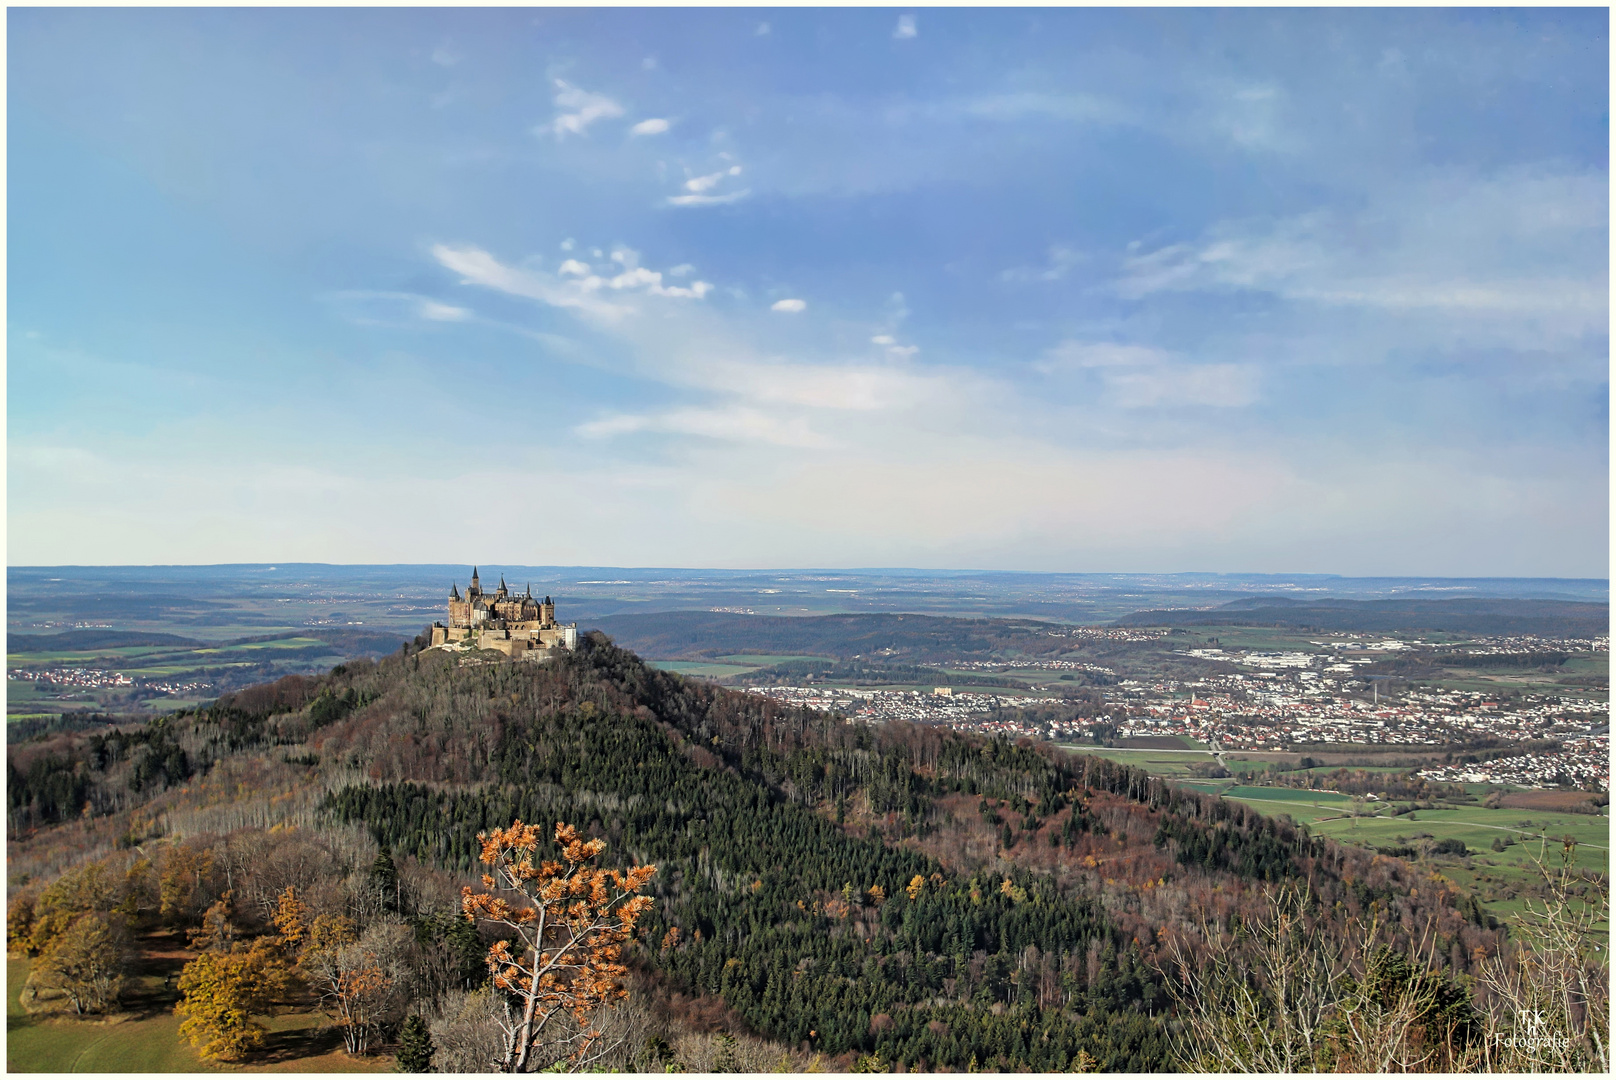 Burg Hohenzollern I